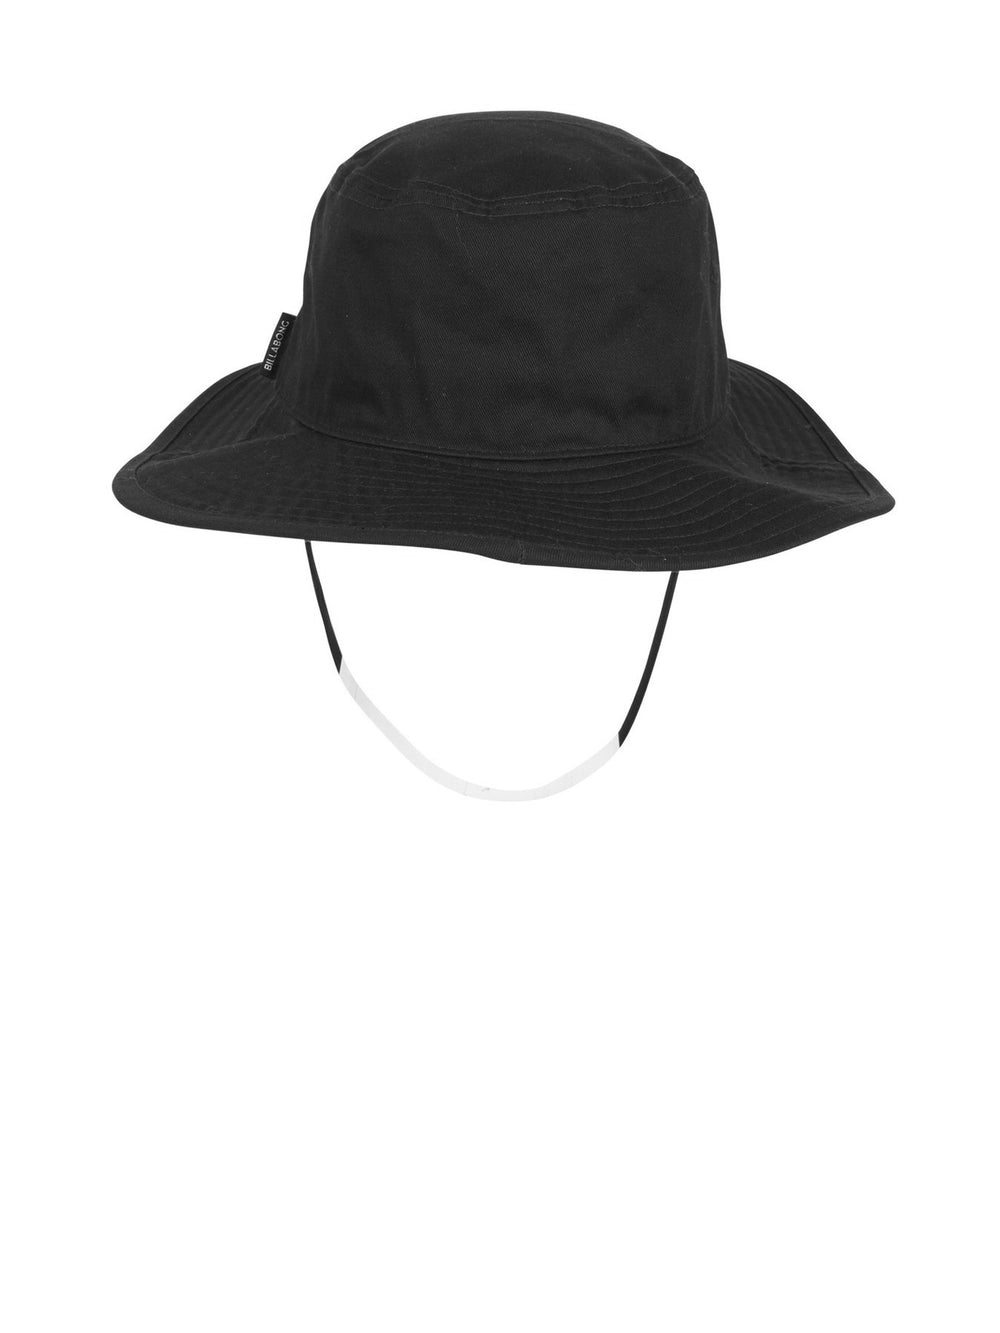 AllPrintInUSA Iran Flag Boonie Safari Fishing Bucket Hat Black at